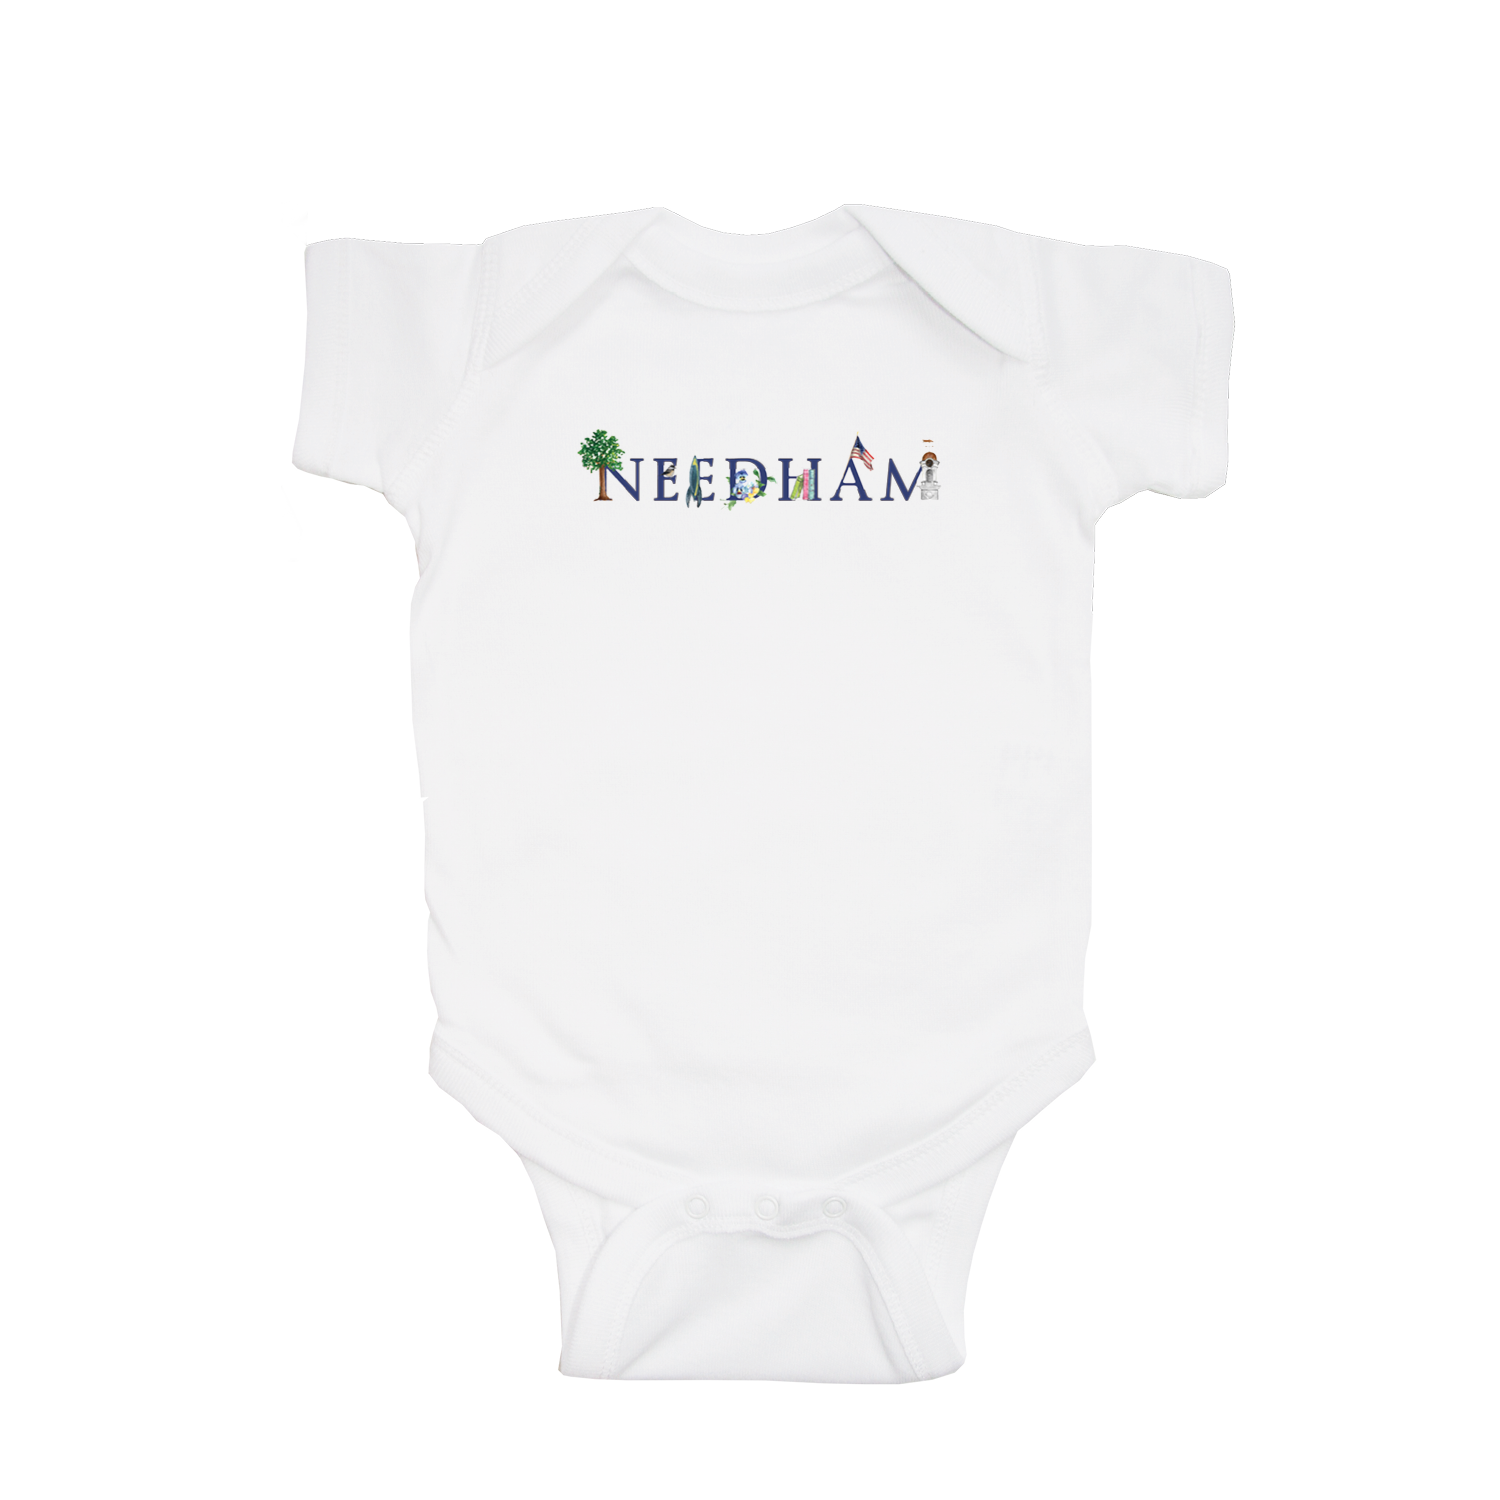 needham baby snap up short sleeve